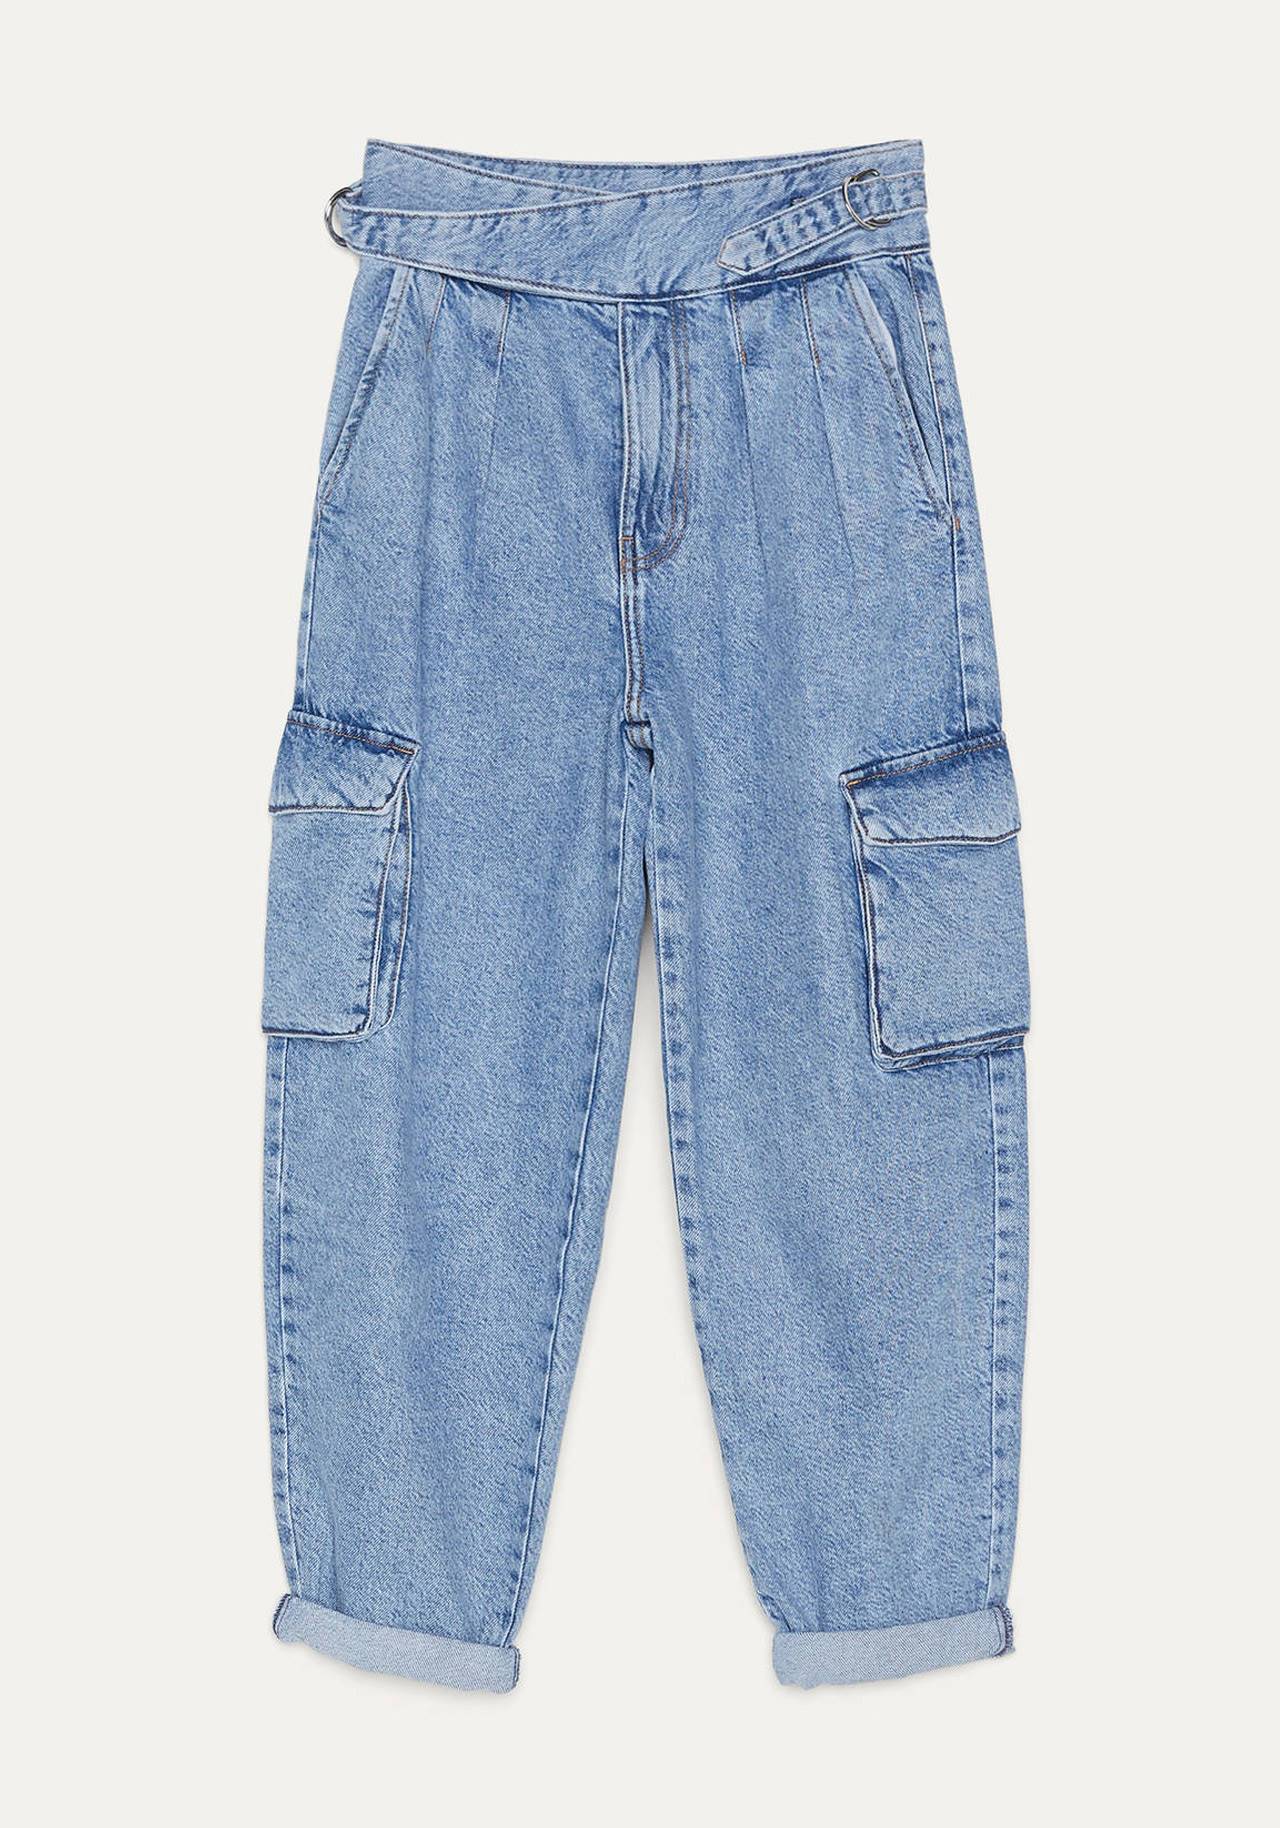 tendencias jeans verano 2020